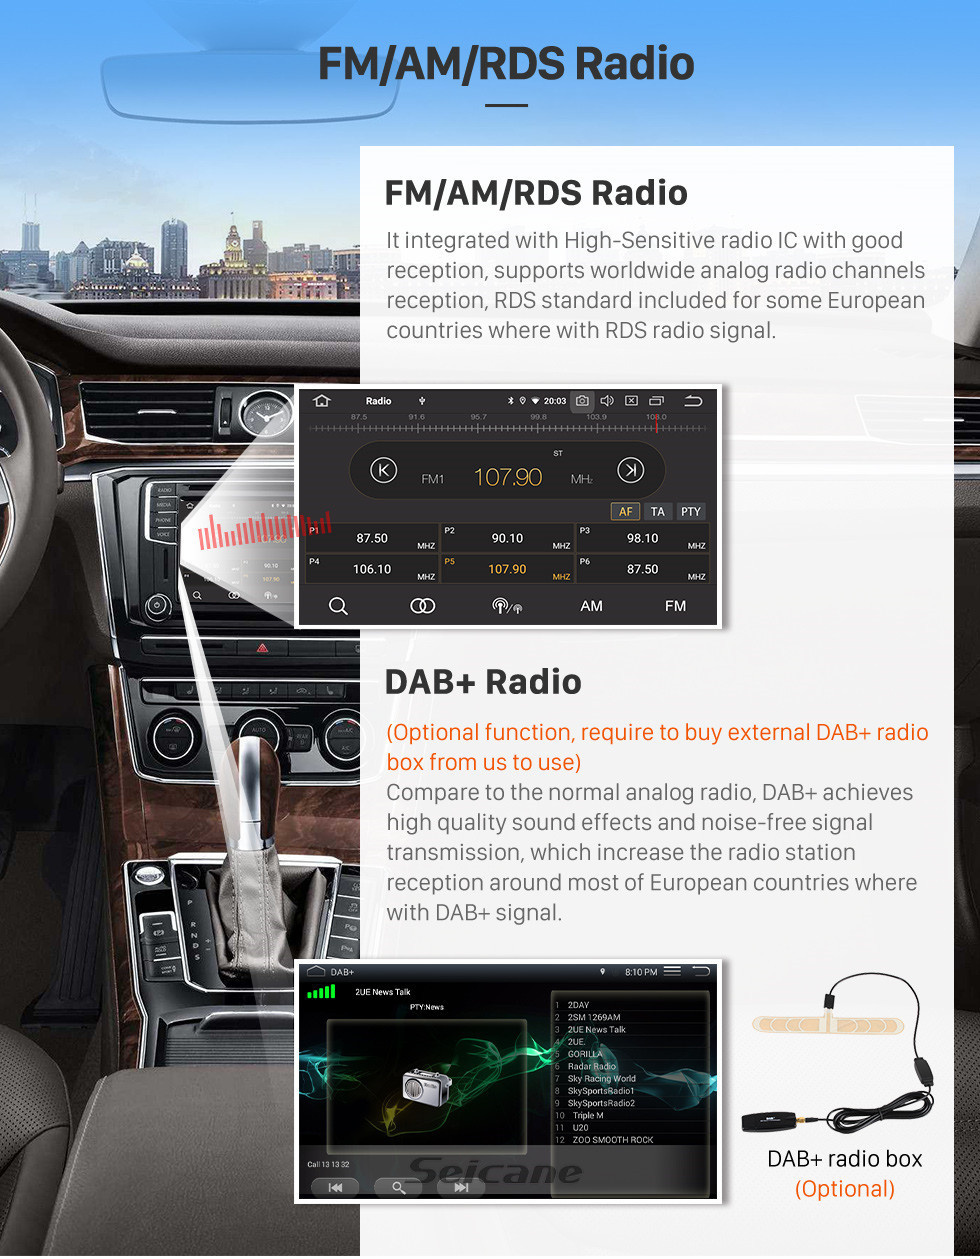 Seicane 9 inch For 2009 Hyundai Sonata Manual A/C Radio Android 11.0 GPS Navigation System Bluetooth HD Touchscreen Carplay support Digital TV